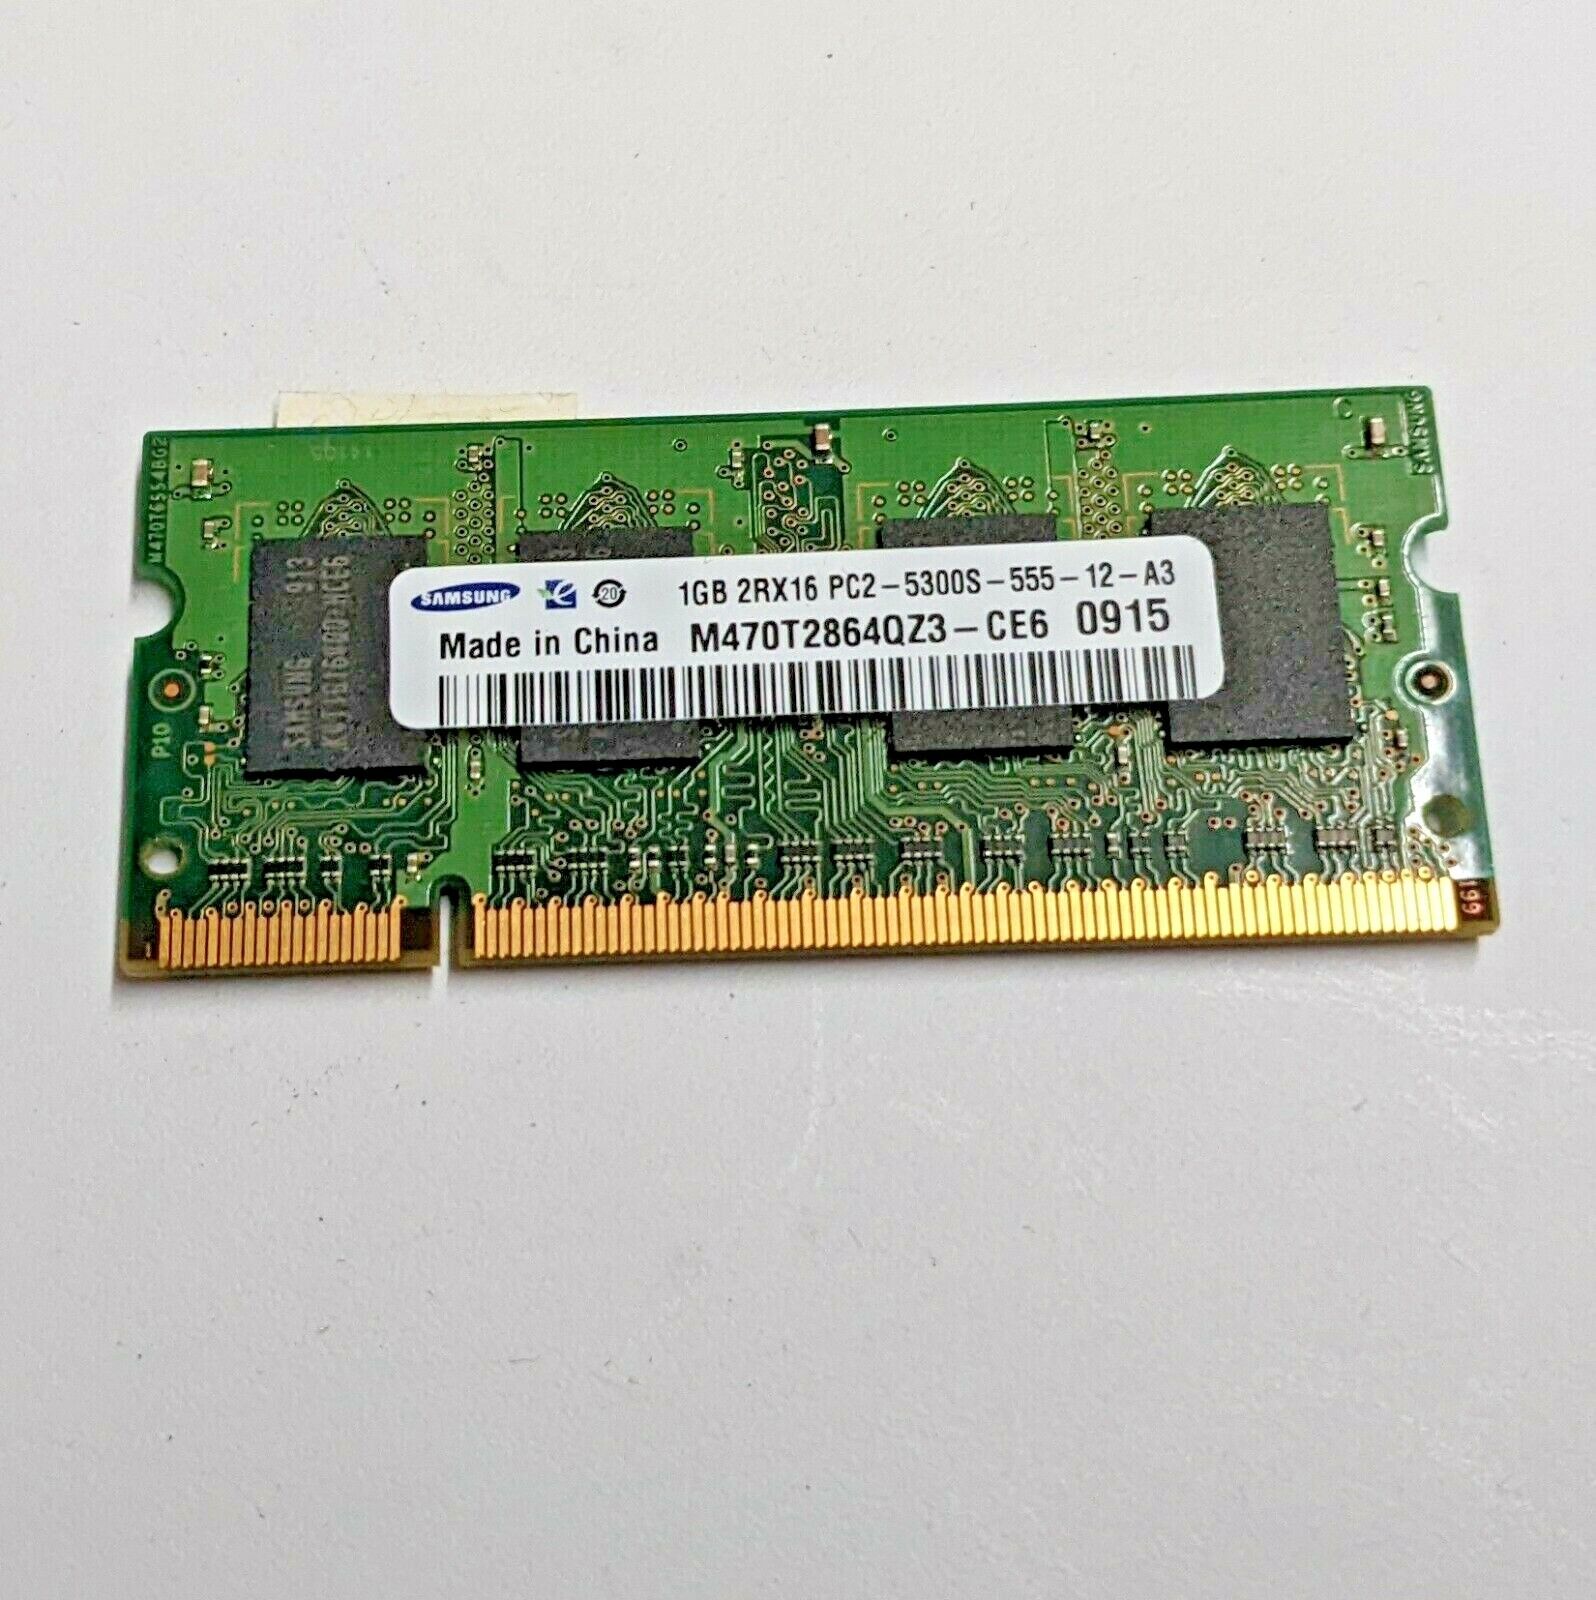 1GB Ram Samsung 2RX16 PC2-5300S-555-12-A3